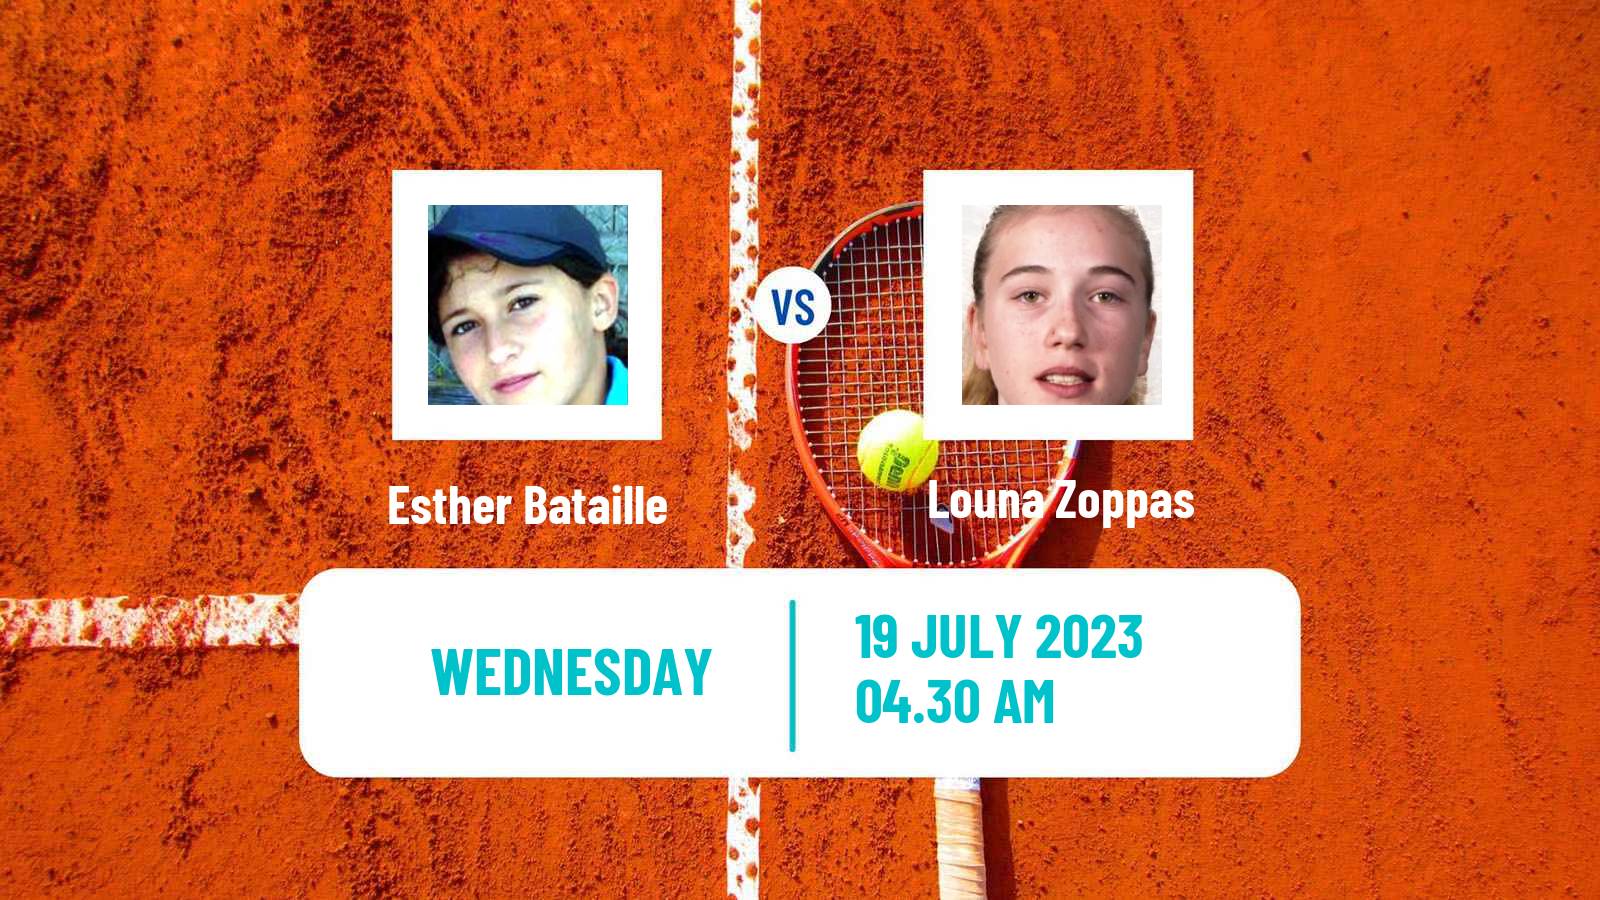 Tennis ITF W15 Les Contamines Montjoie Women Esther Bataille - Louna Zoppas